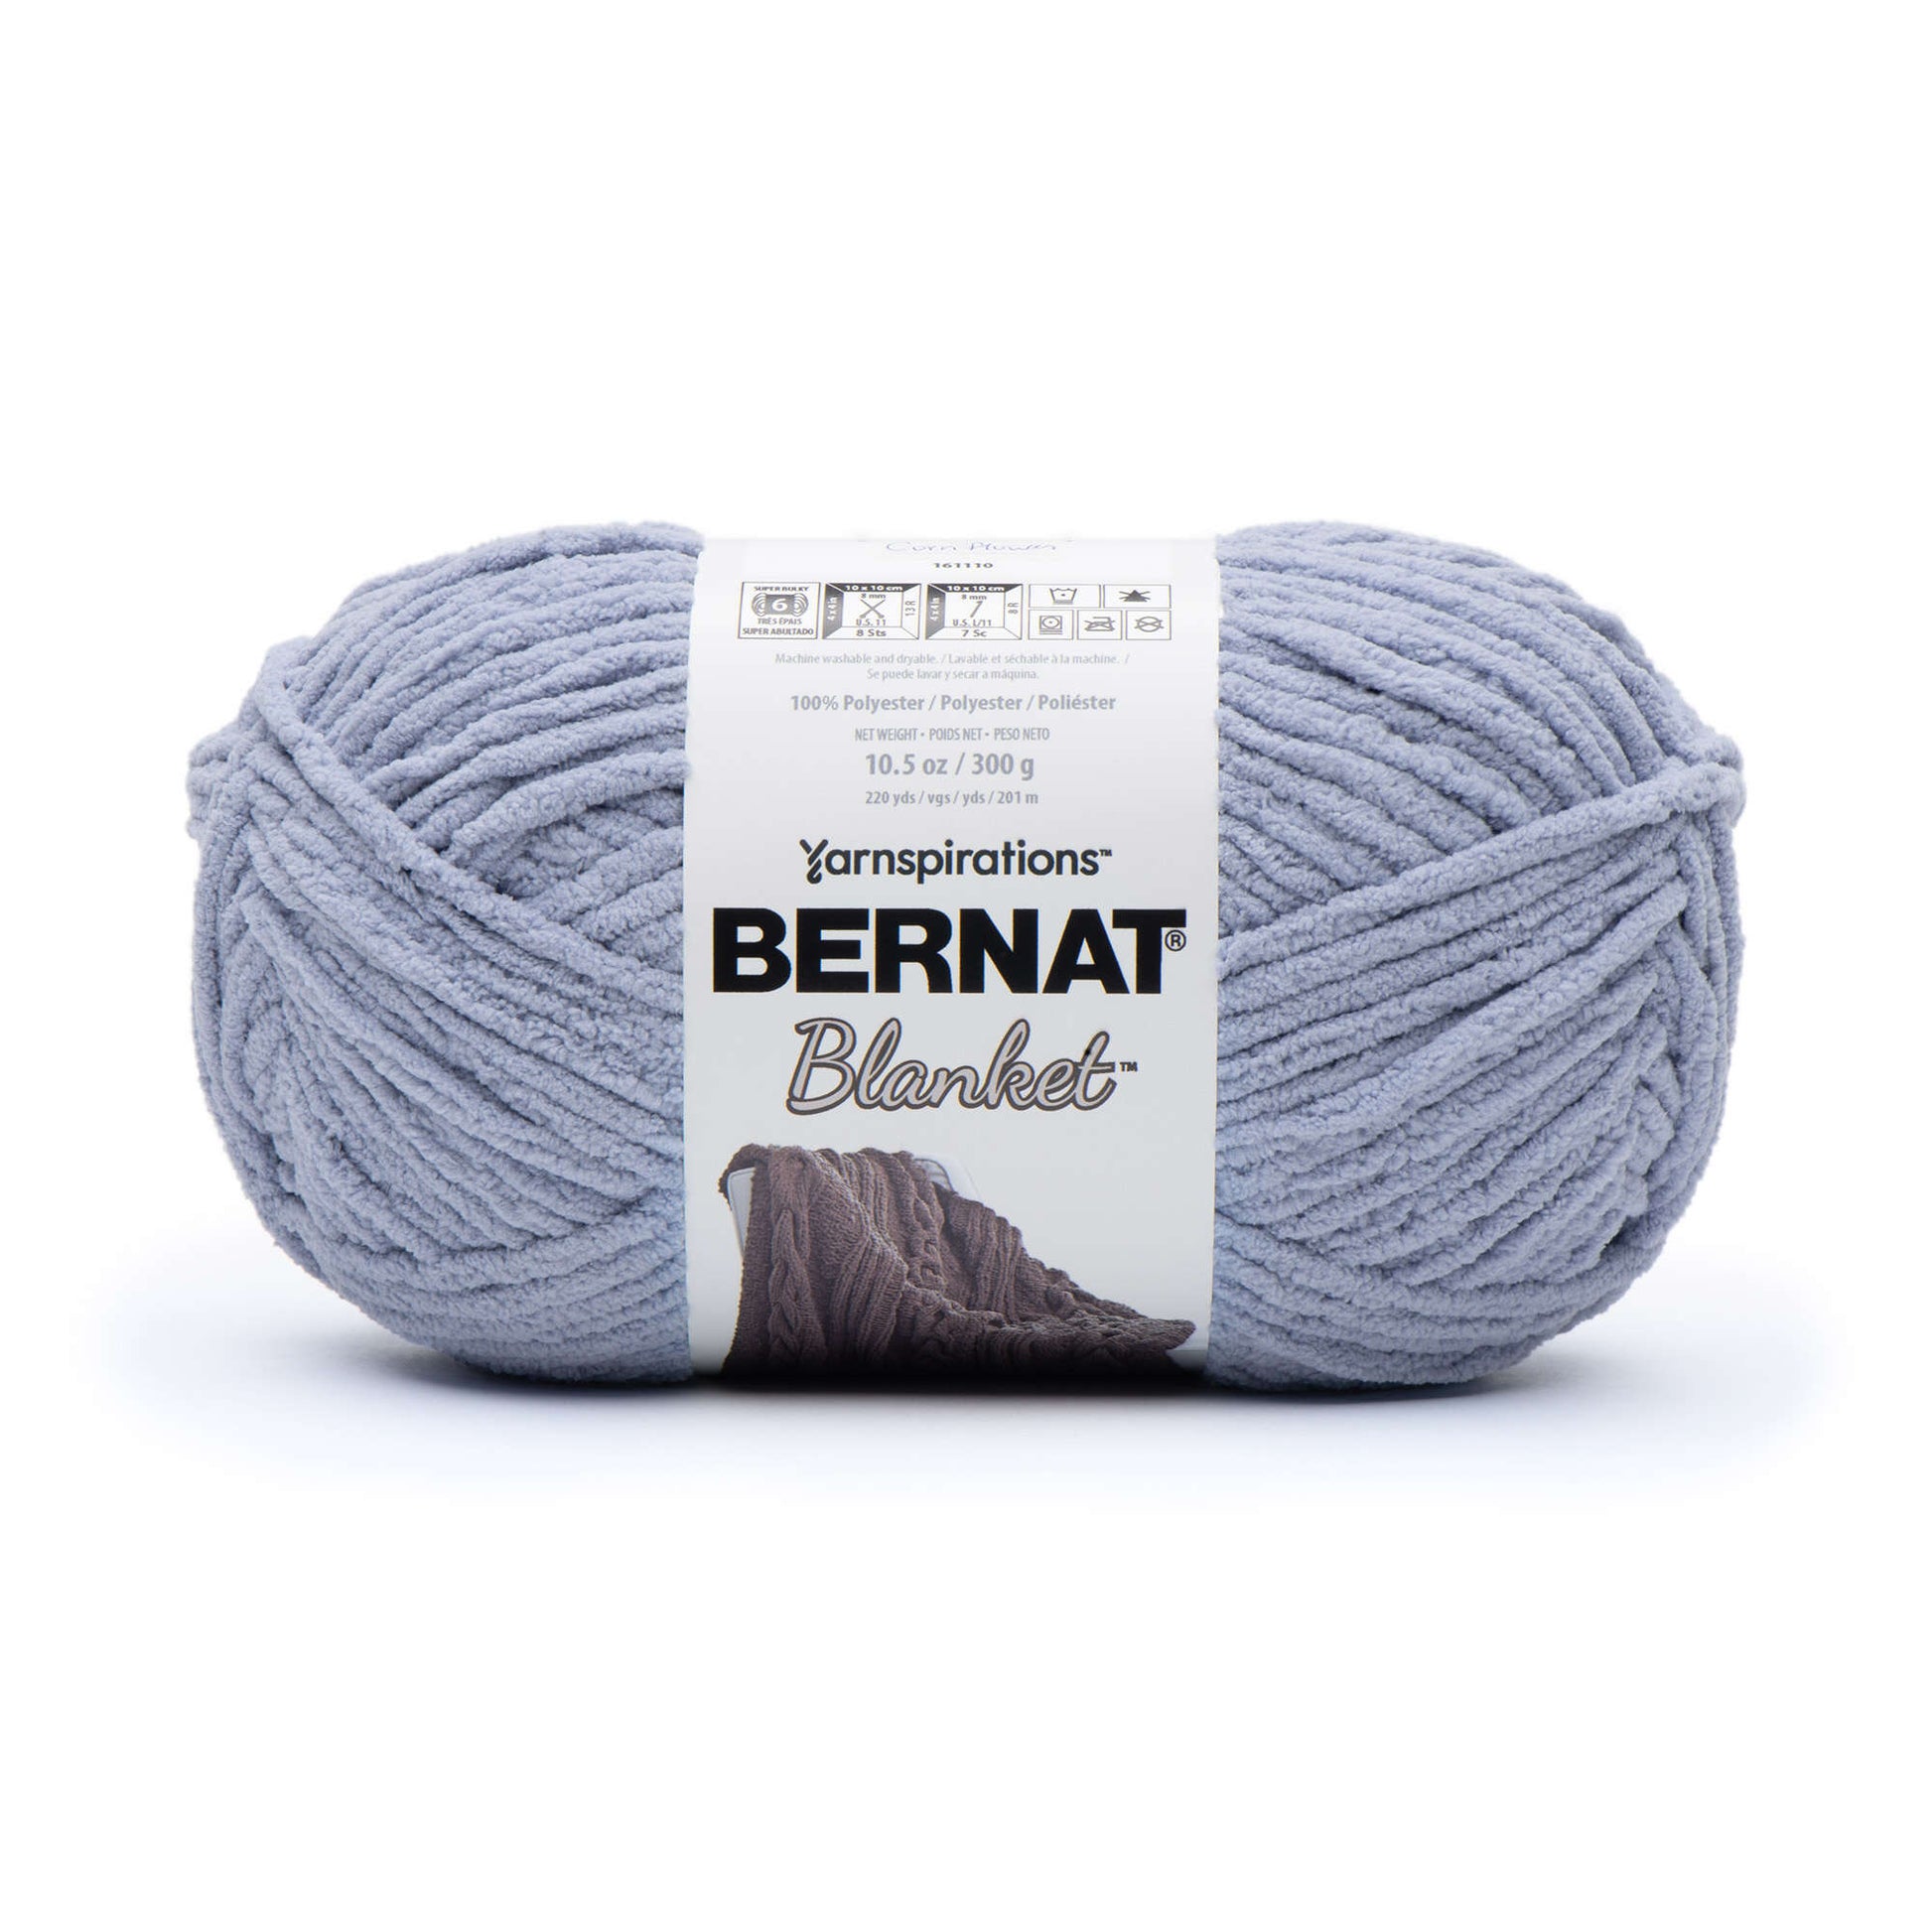 Bernat Blanket Yarn, 10.5 Ounce, Harvest, Single Ball